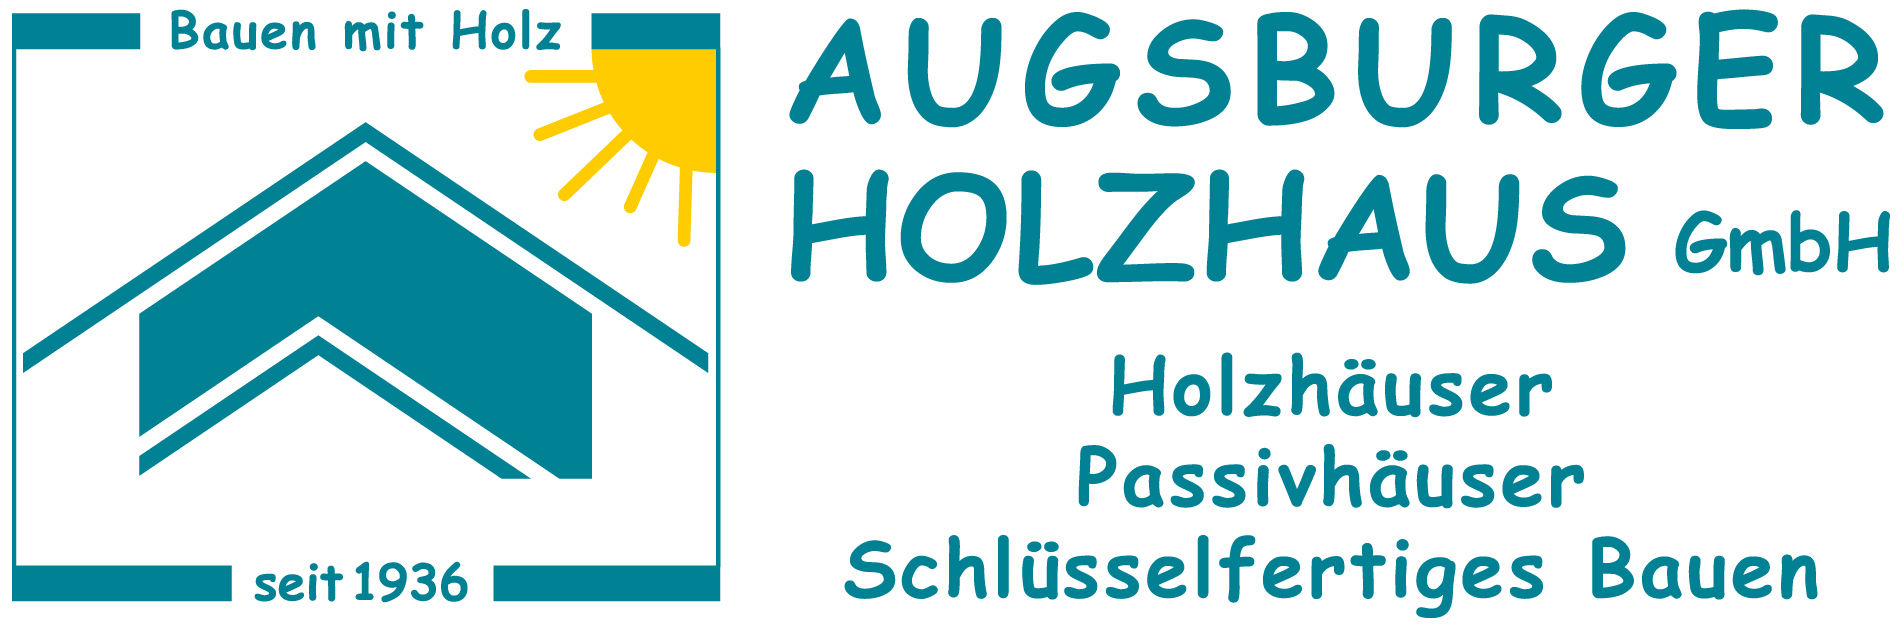 Augsburger Holzhaus GmbH